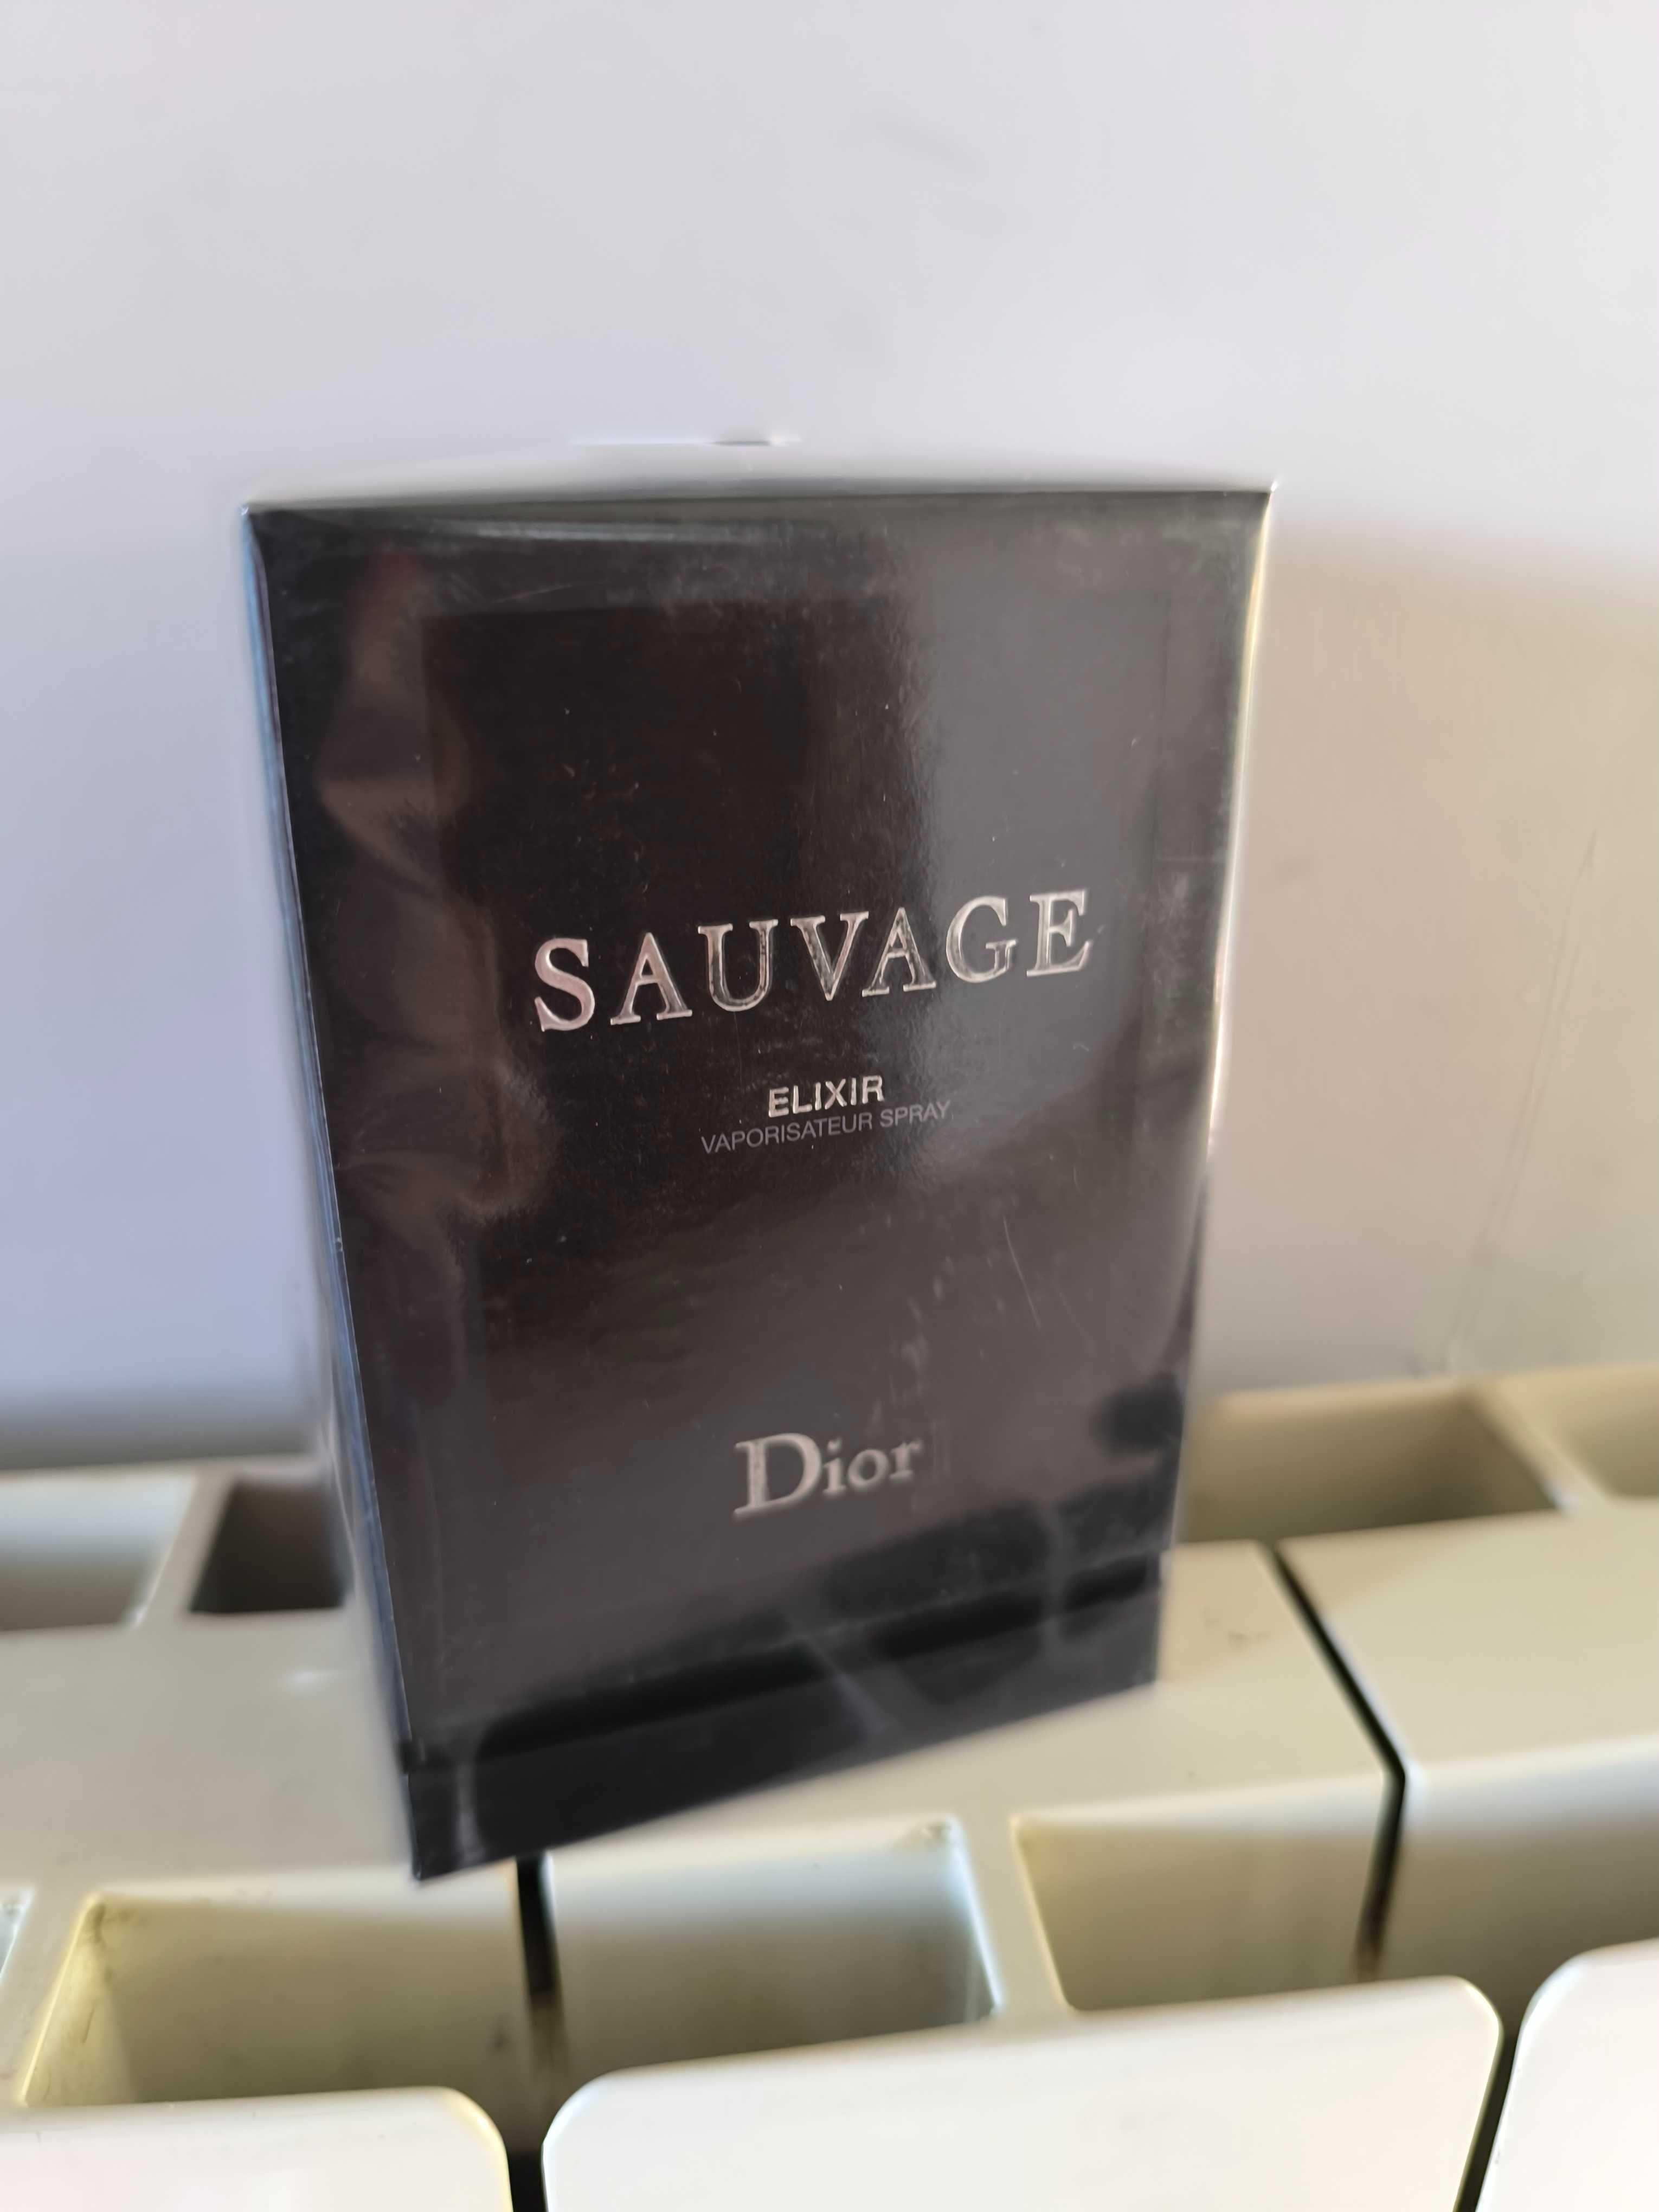 Dior sauvage elixir 60ml